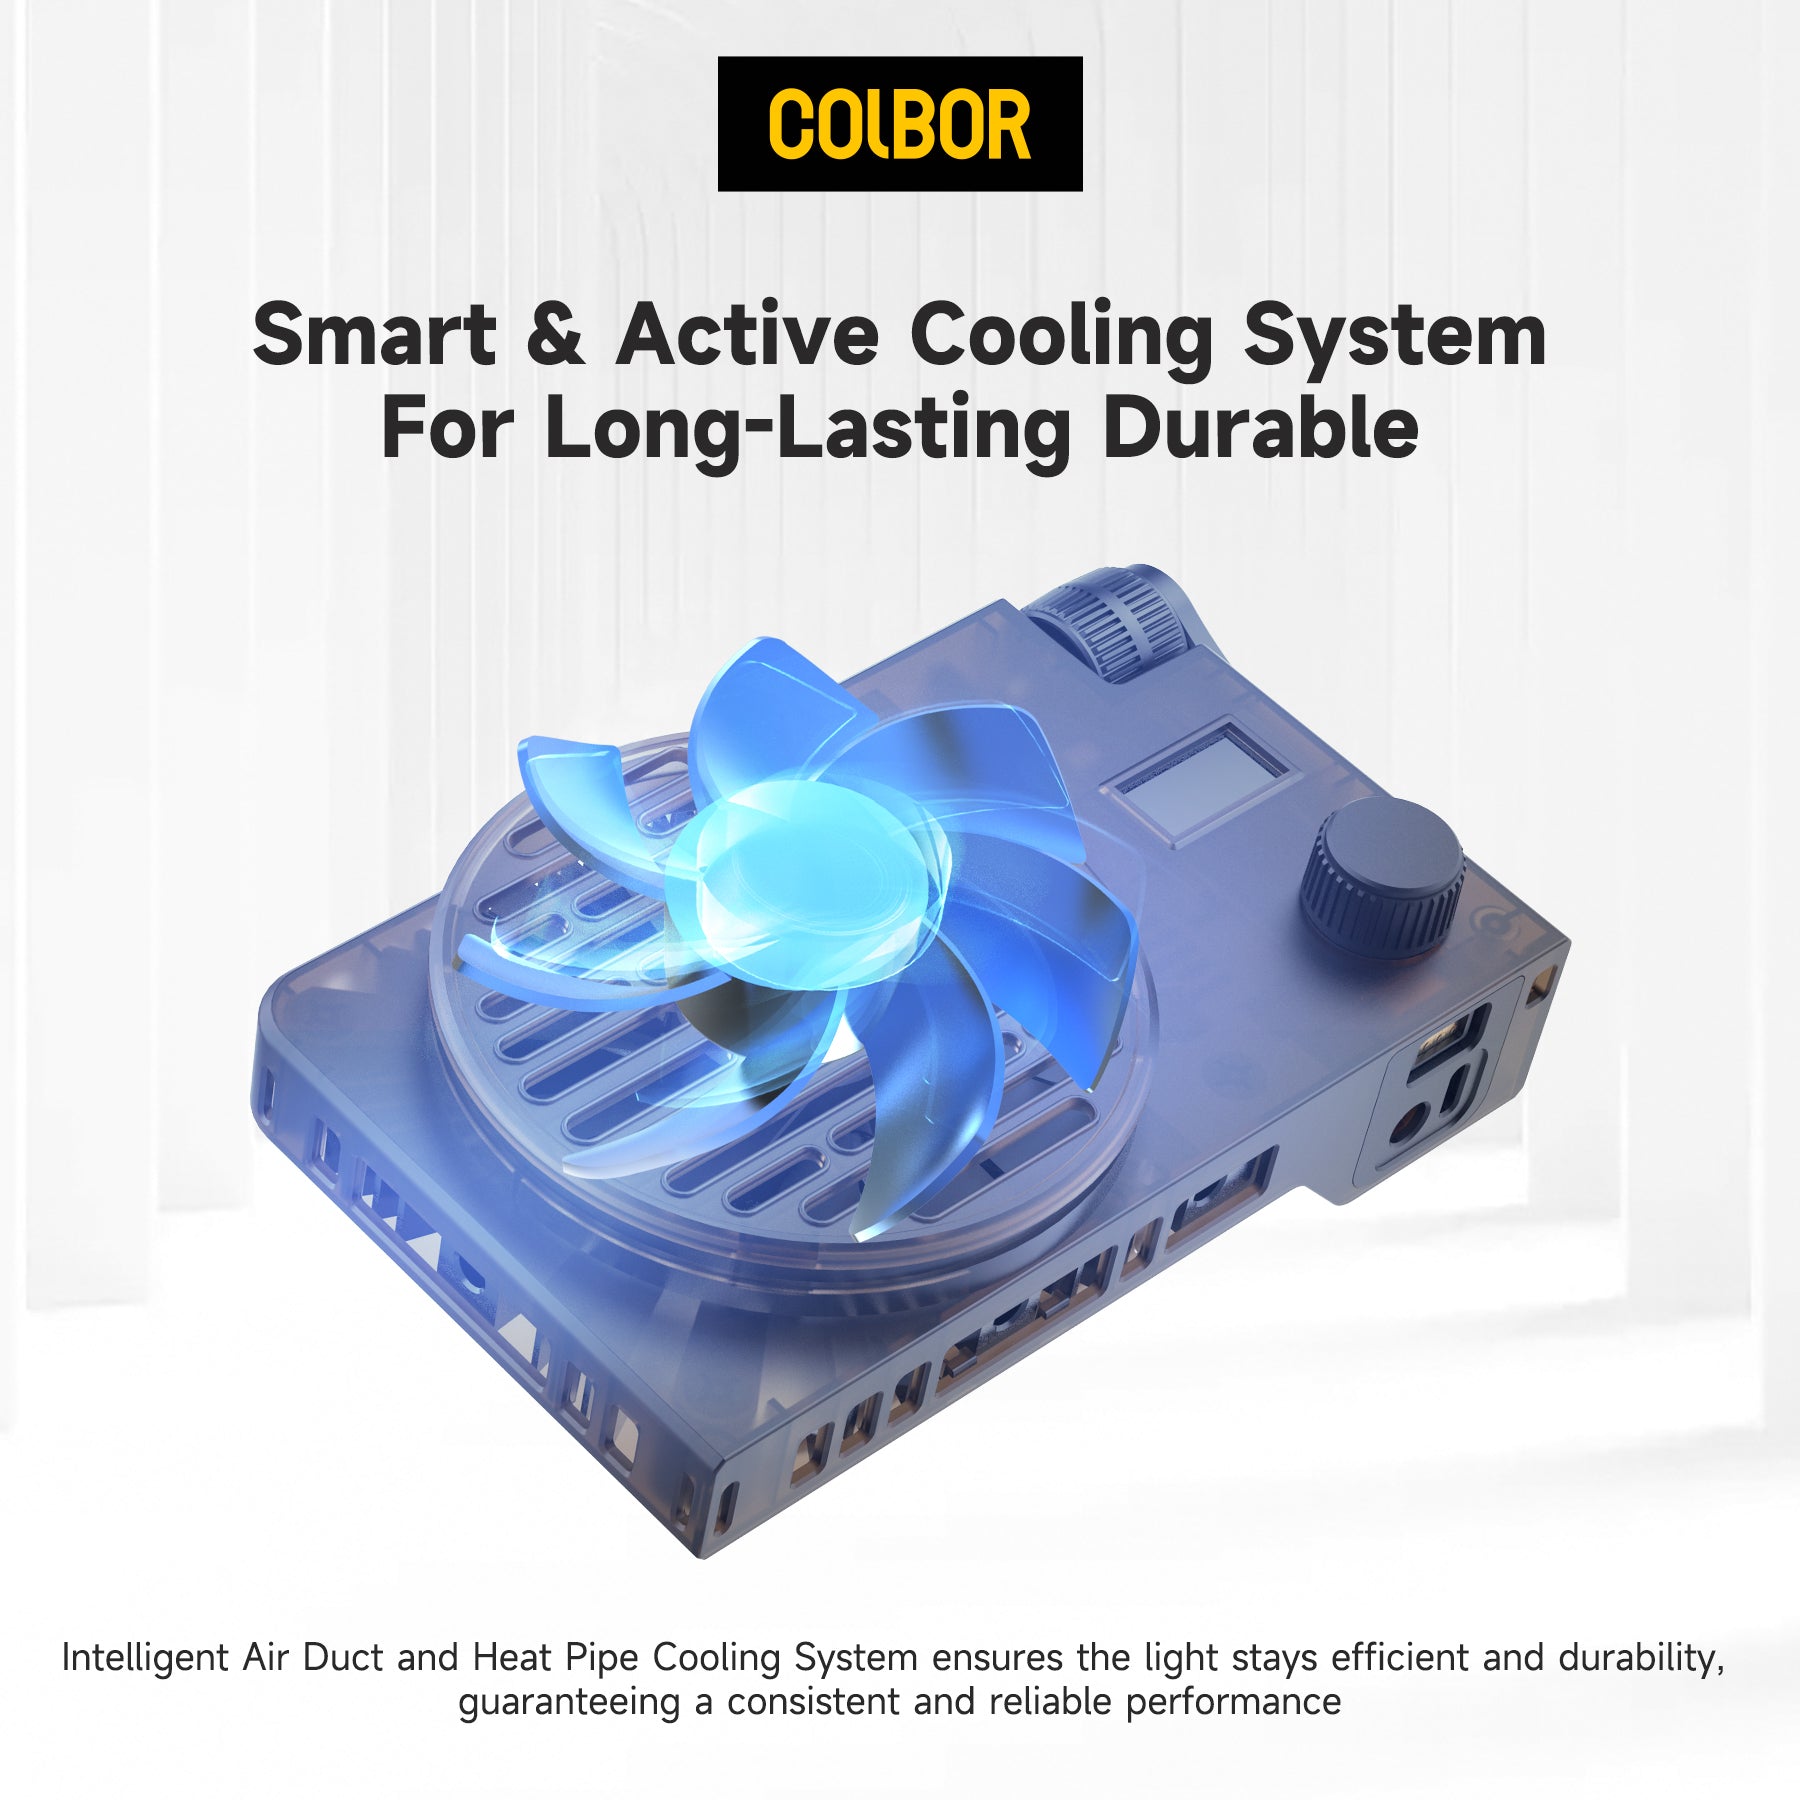 Colbor W100 100W 2700K-6500K Bi-Color Portable  LED Video Light for Filmmaking